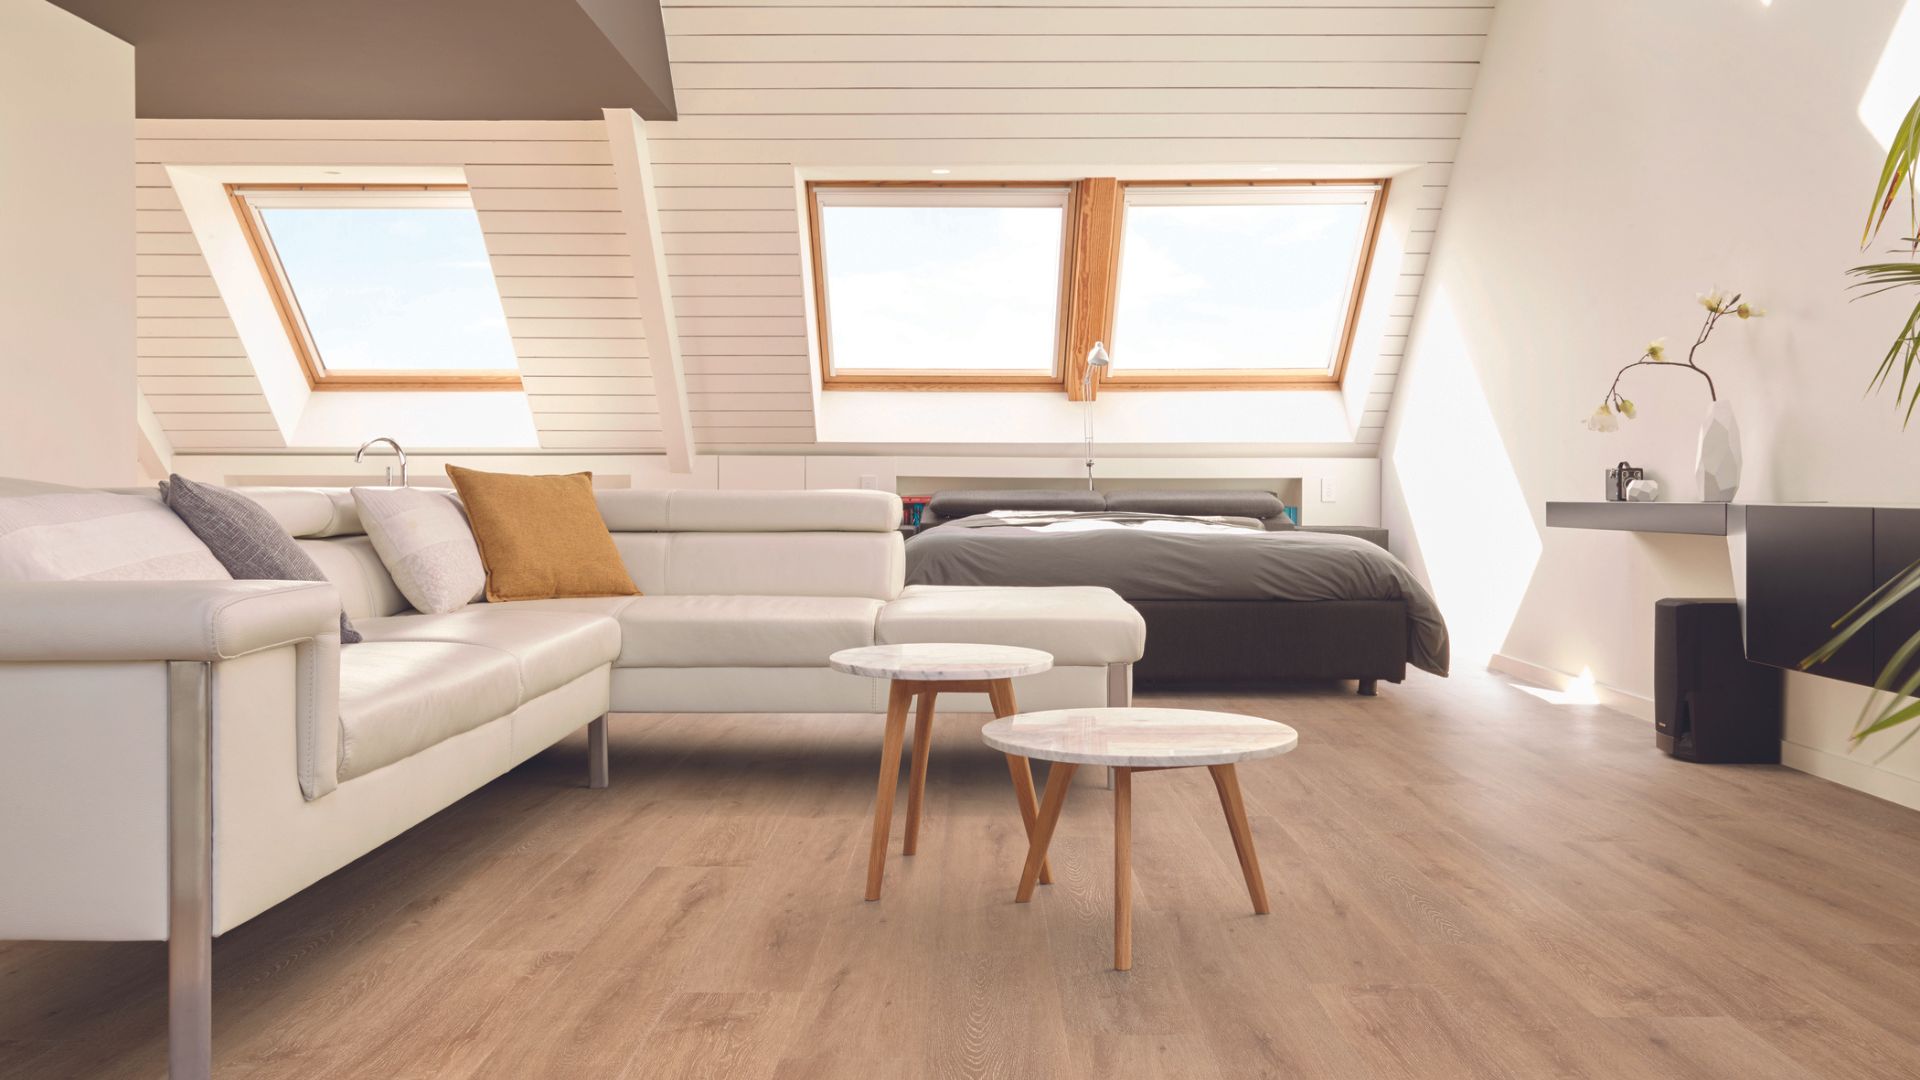 Laminate wood flooring in a living room.